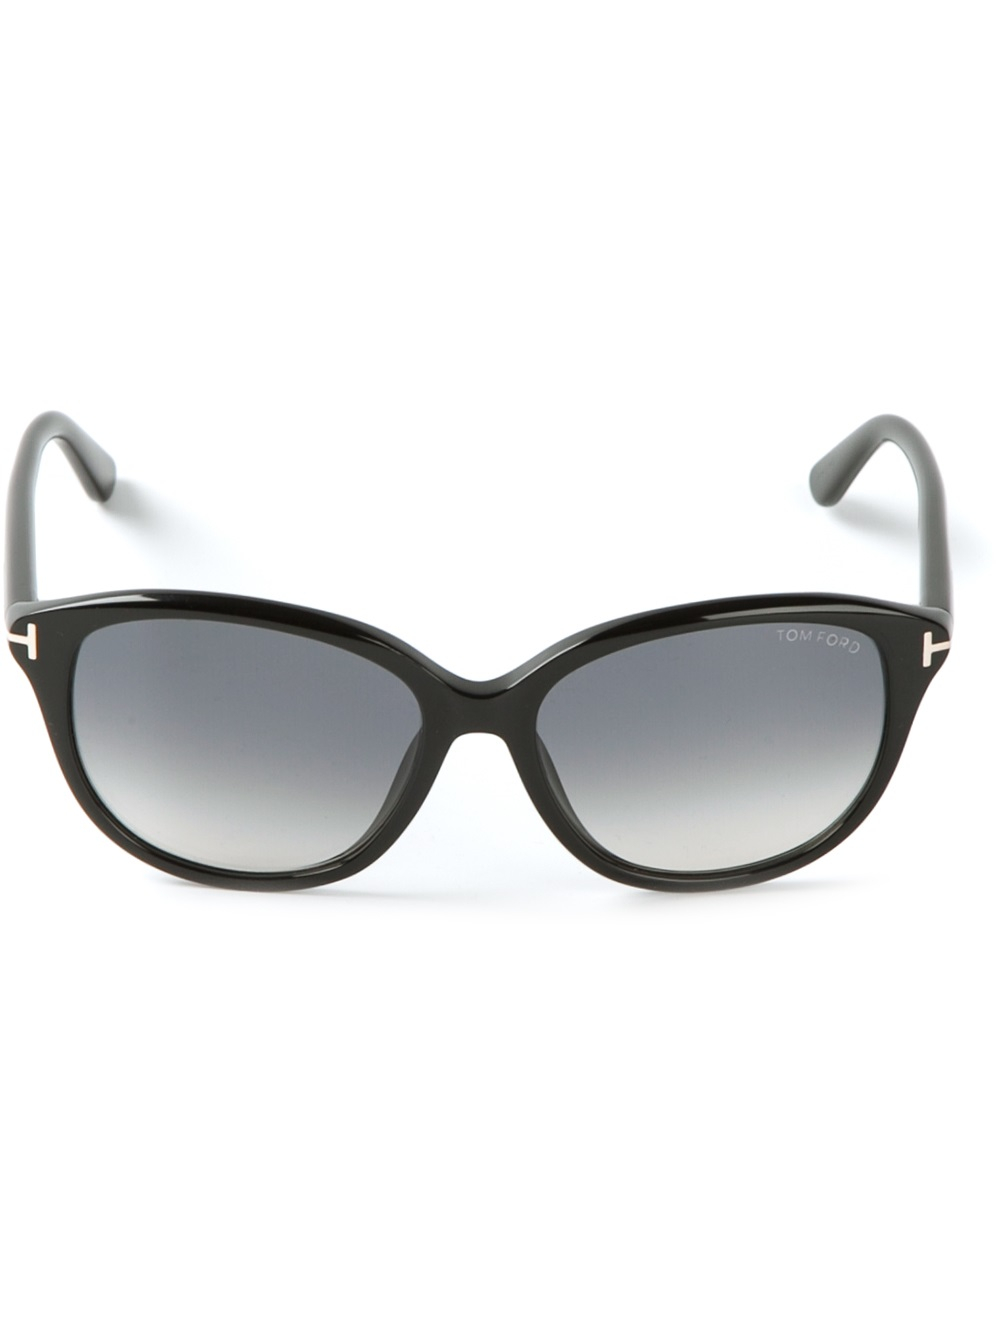 Tom ford round-frame metal sunglasses #4